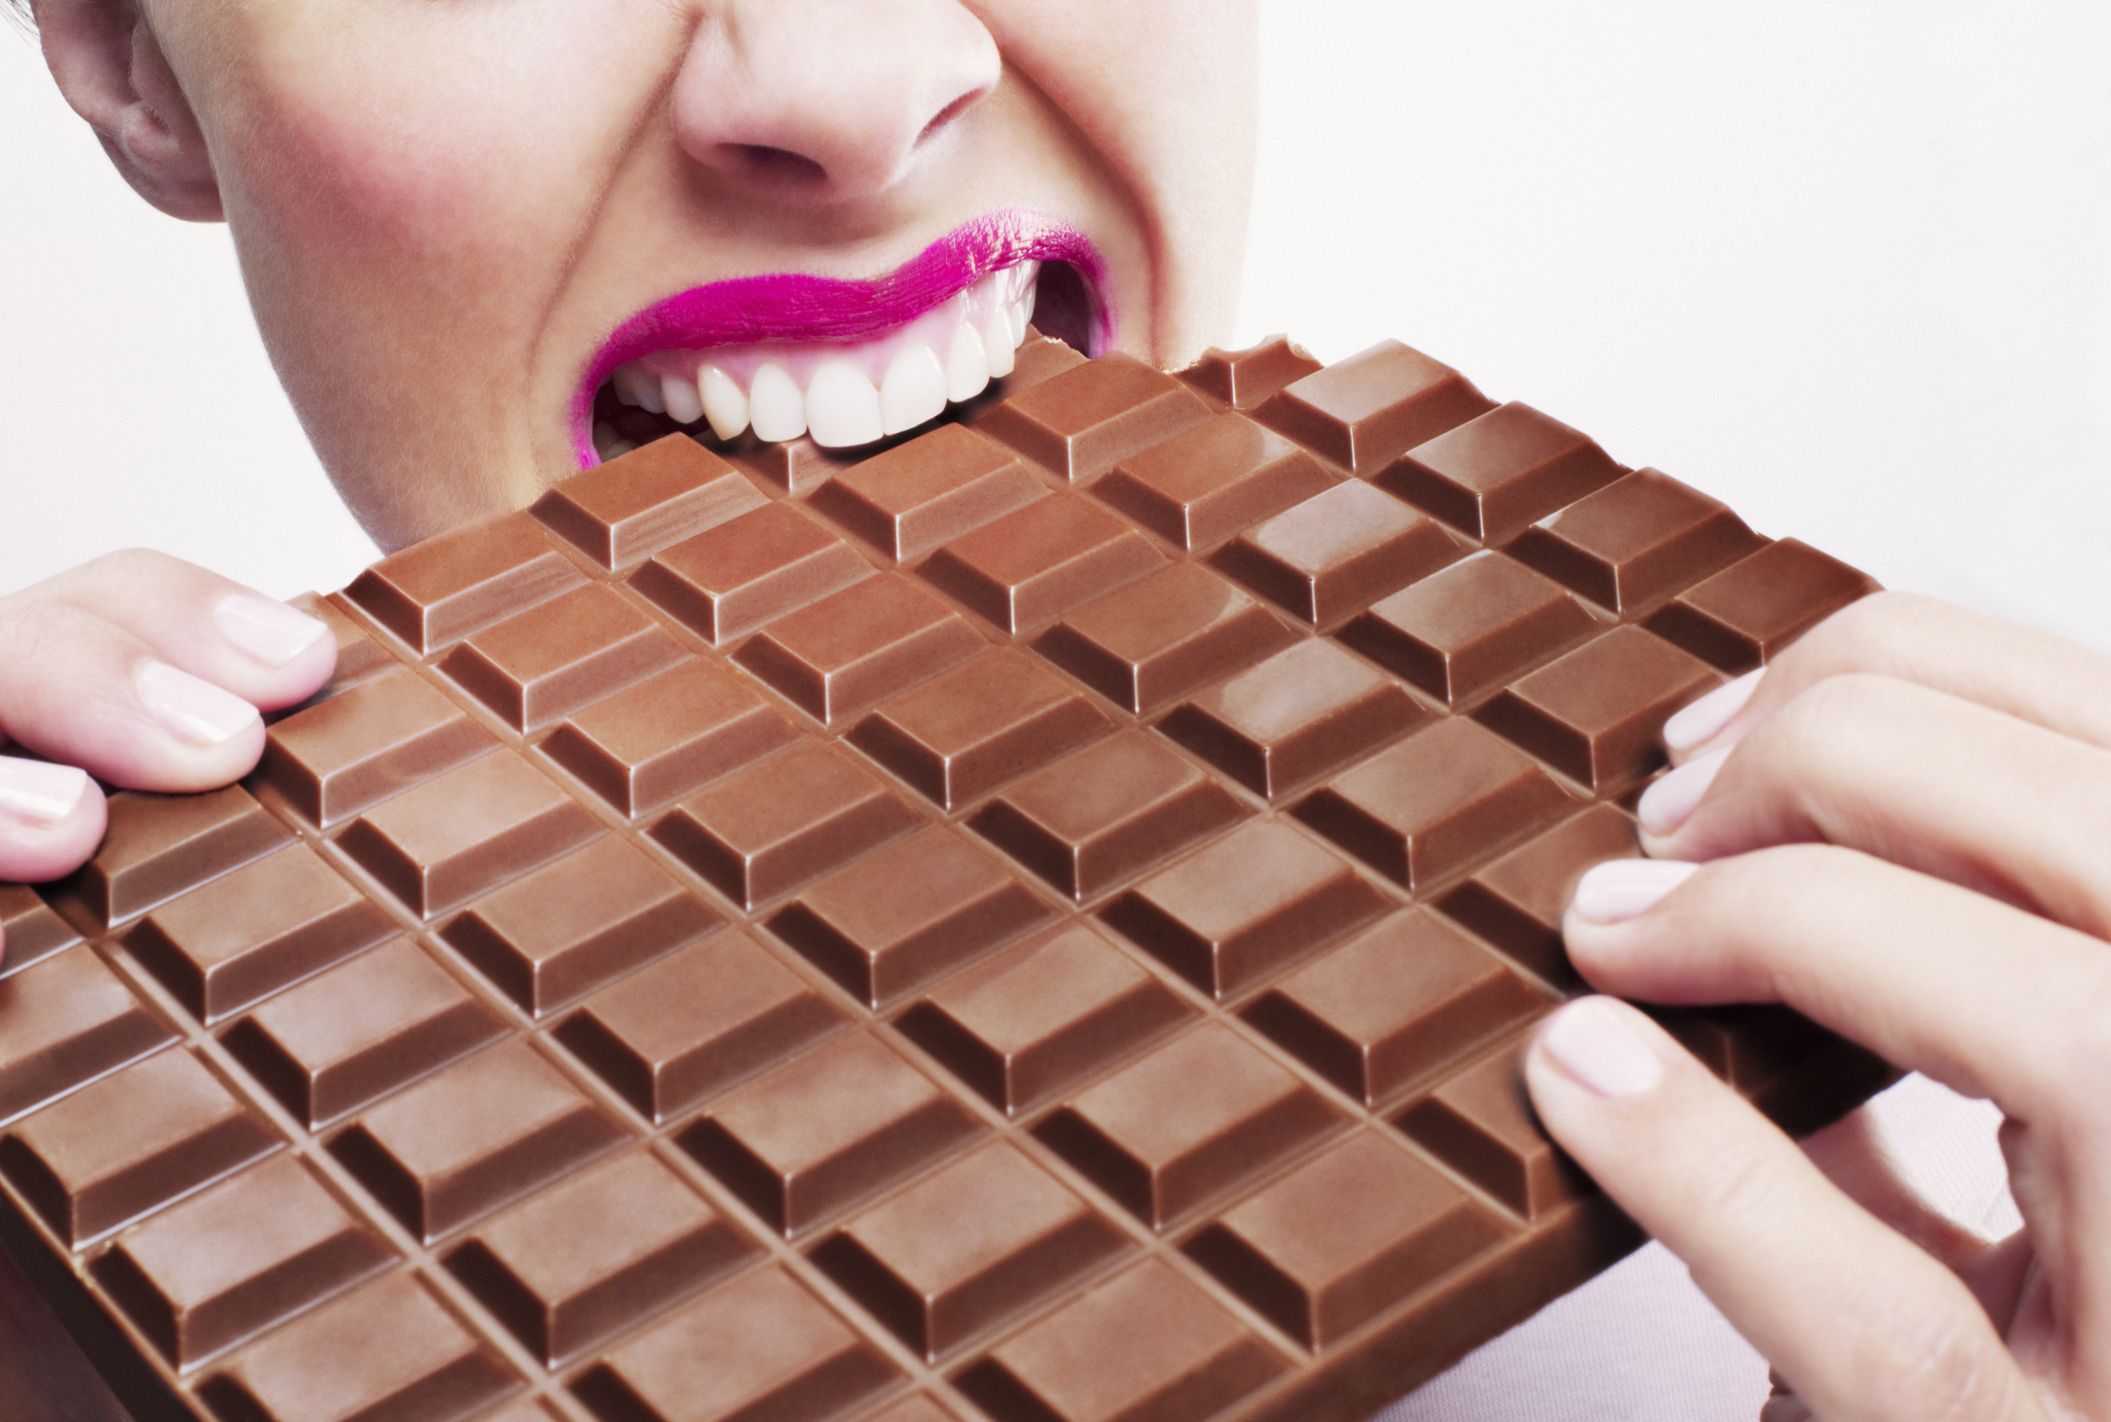 Eating Chocolate Like This Can Actually Make You Smarter